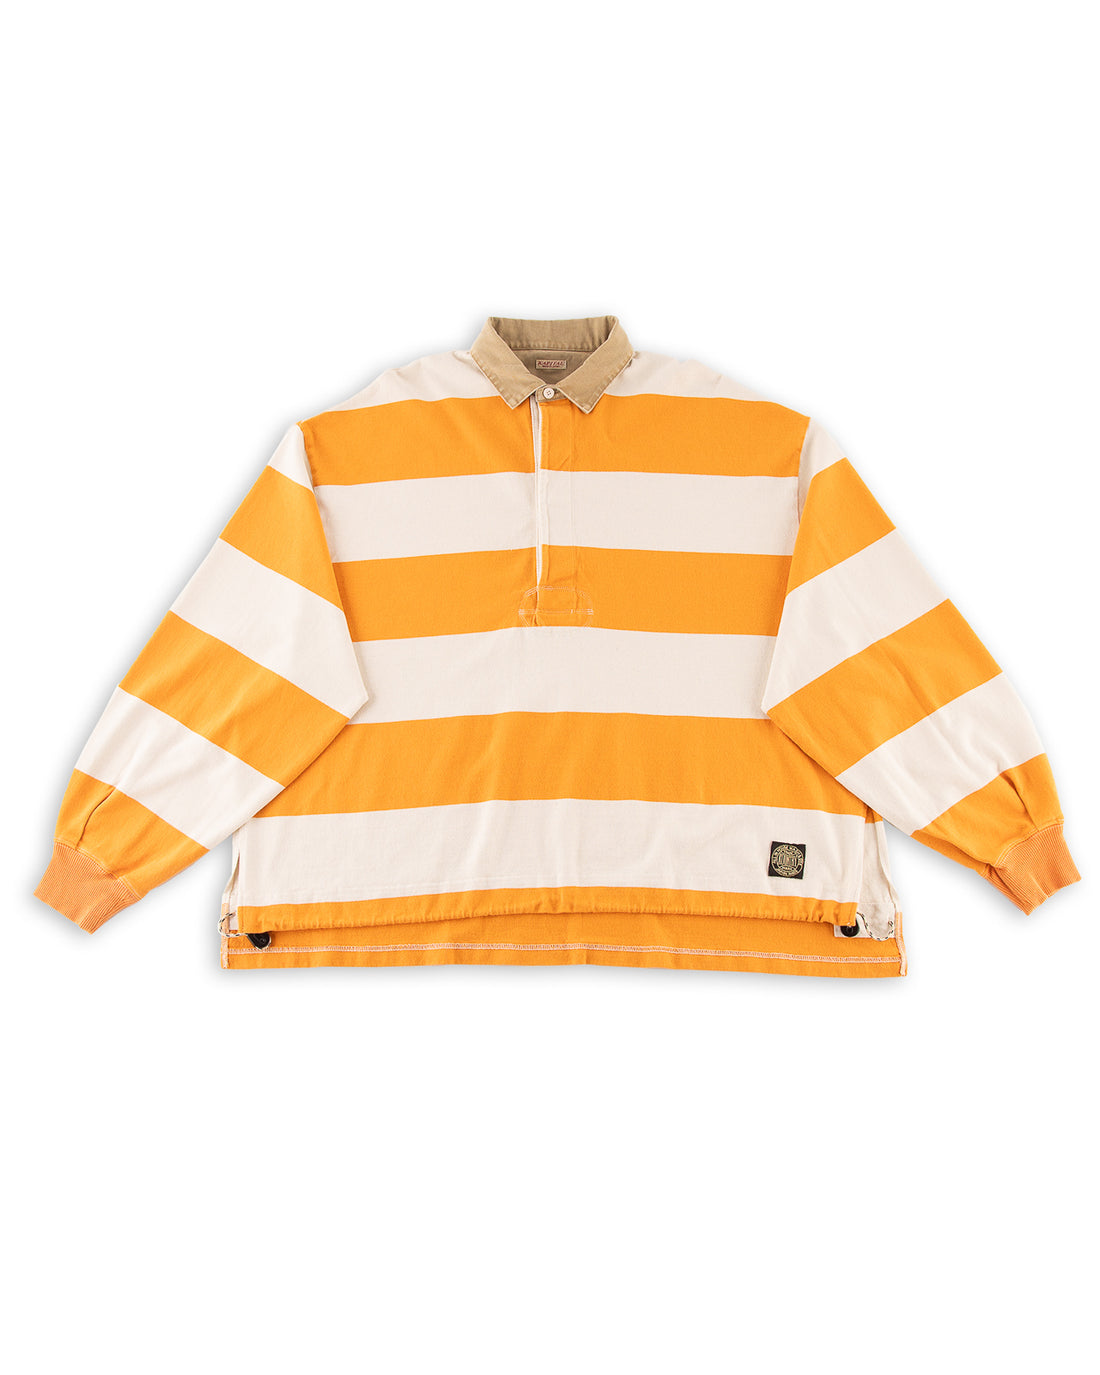 Kapital JAIL Stripe Jersey BIG Rugger Shirt - Ecru x Orange 3 - Standard & Strange